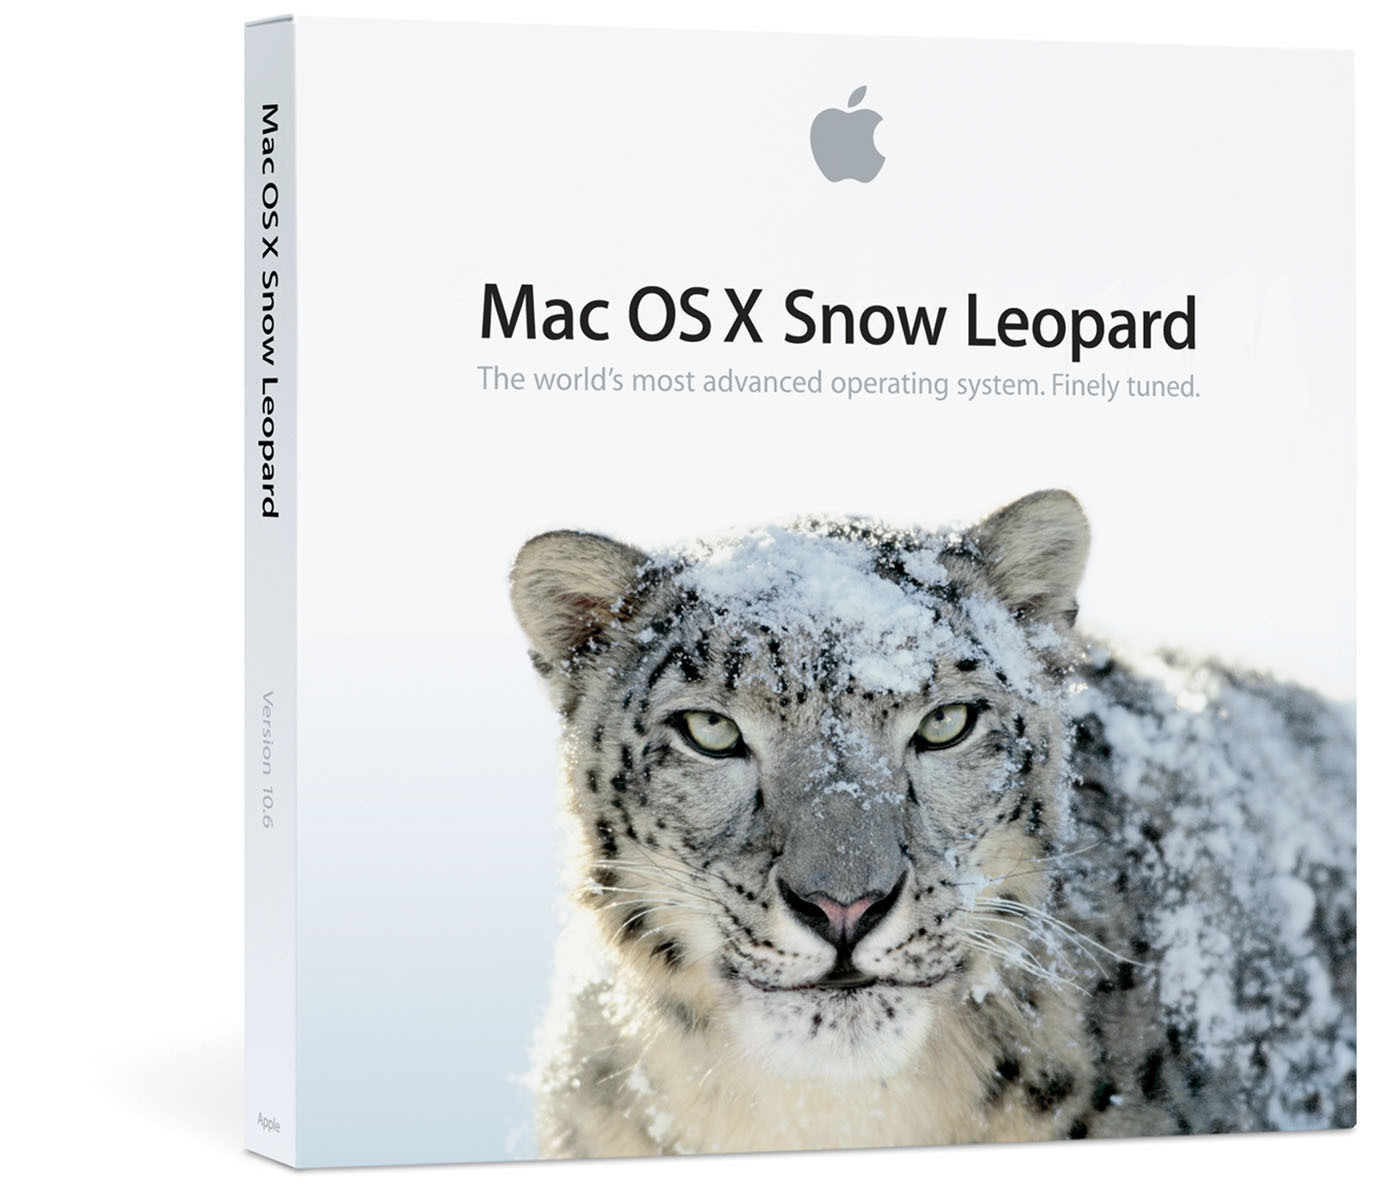 SnowLeopard_Mac_02.jpg